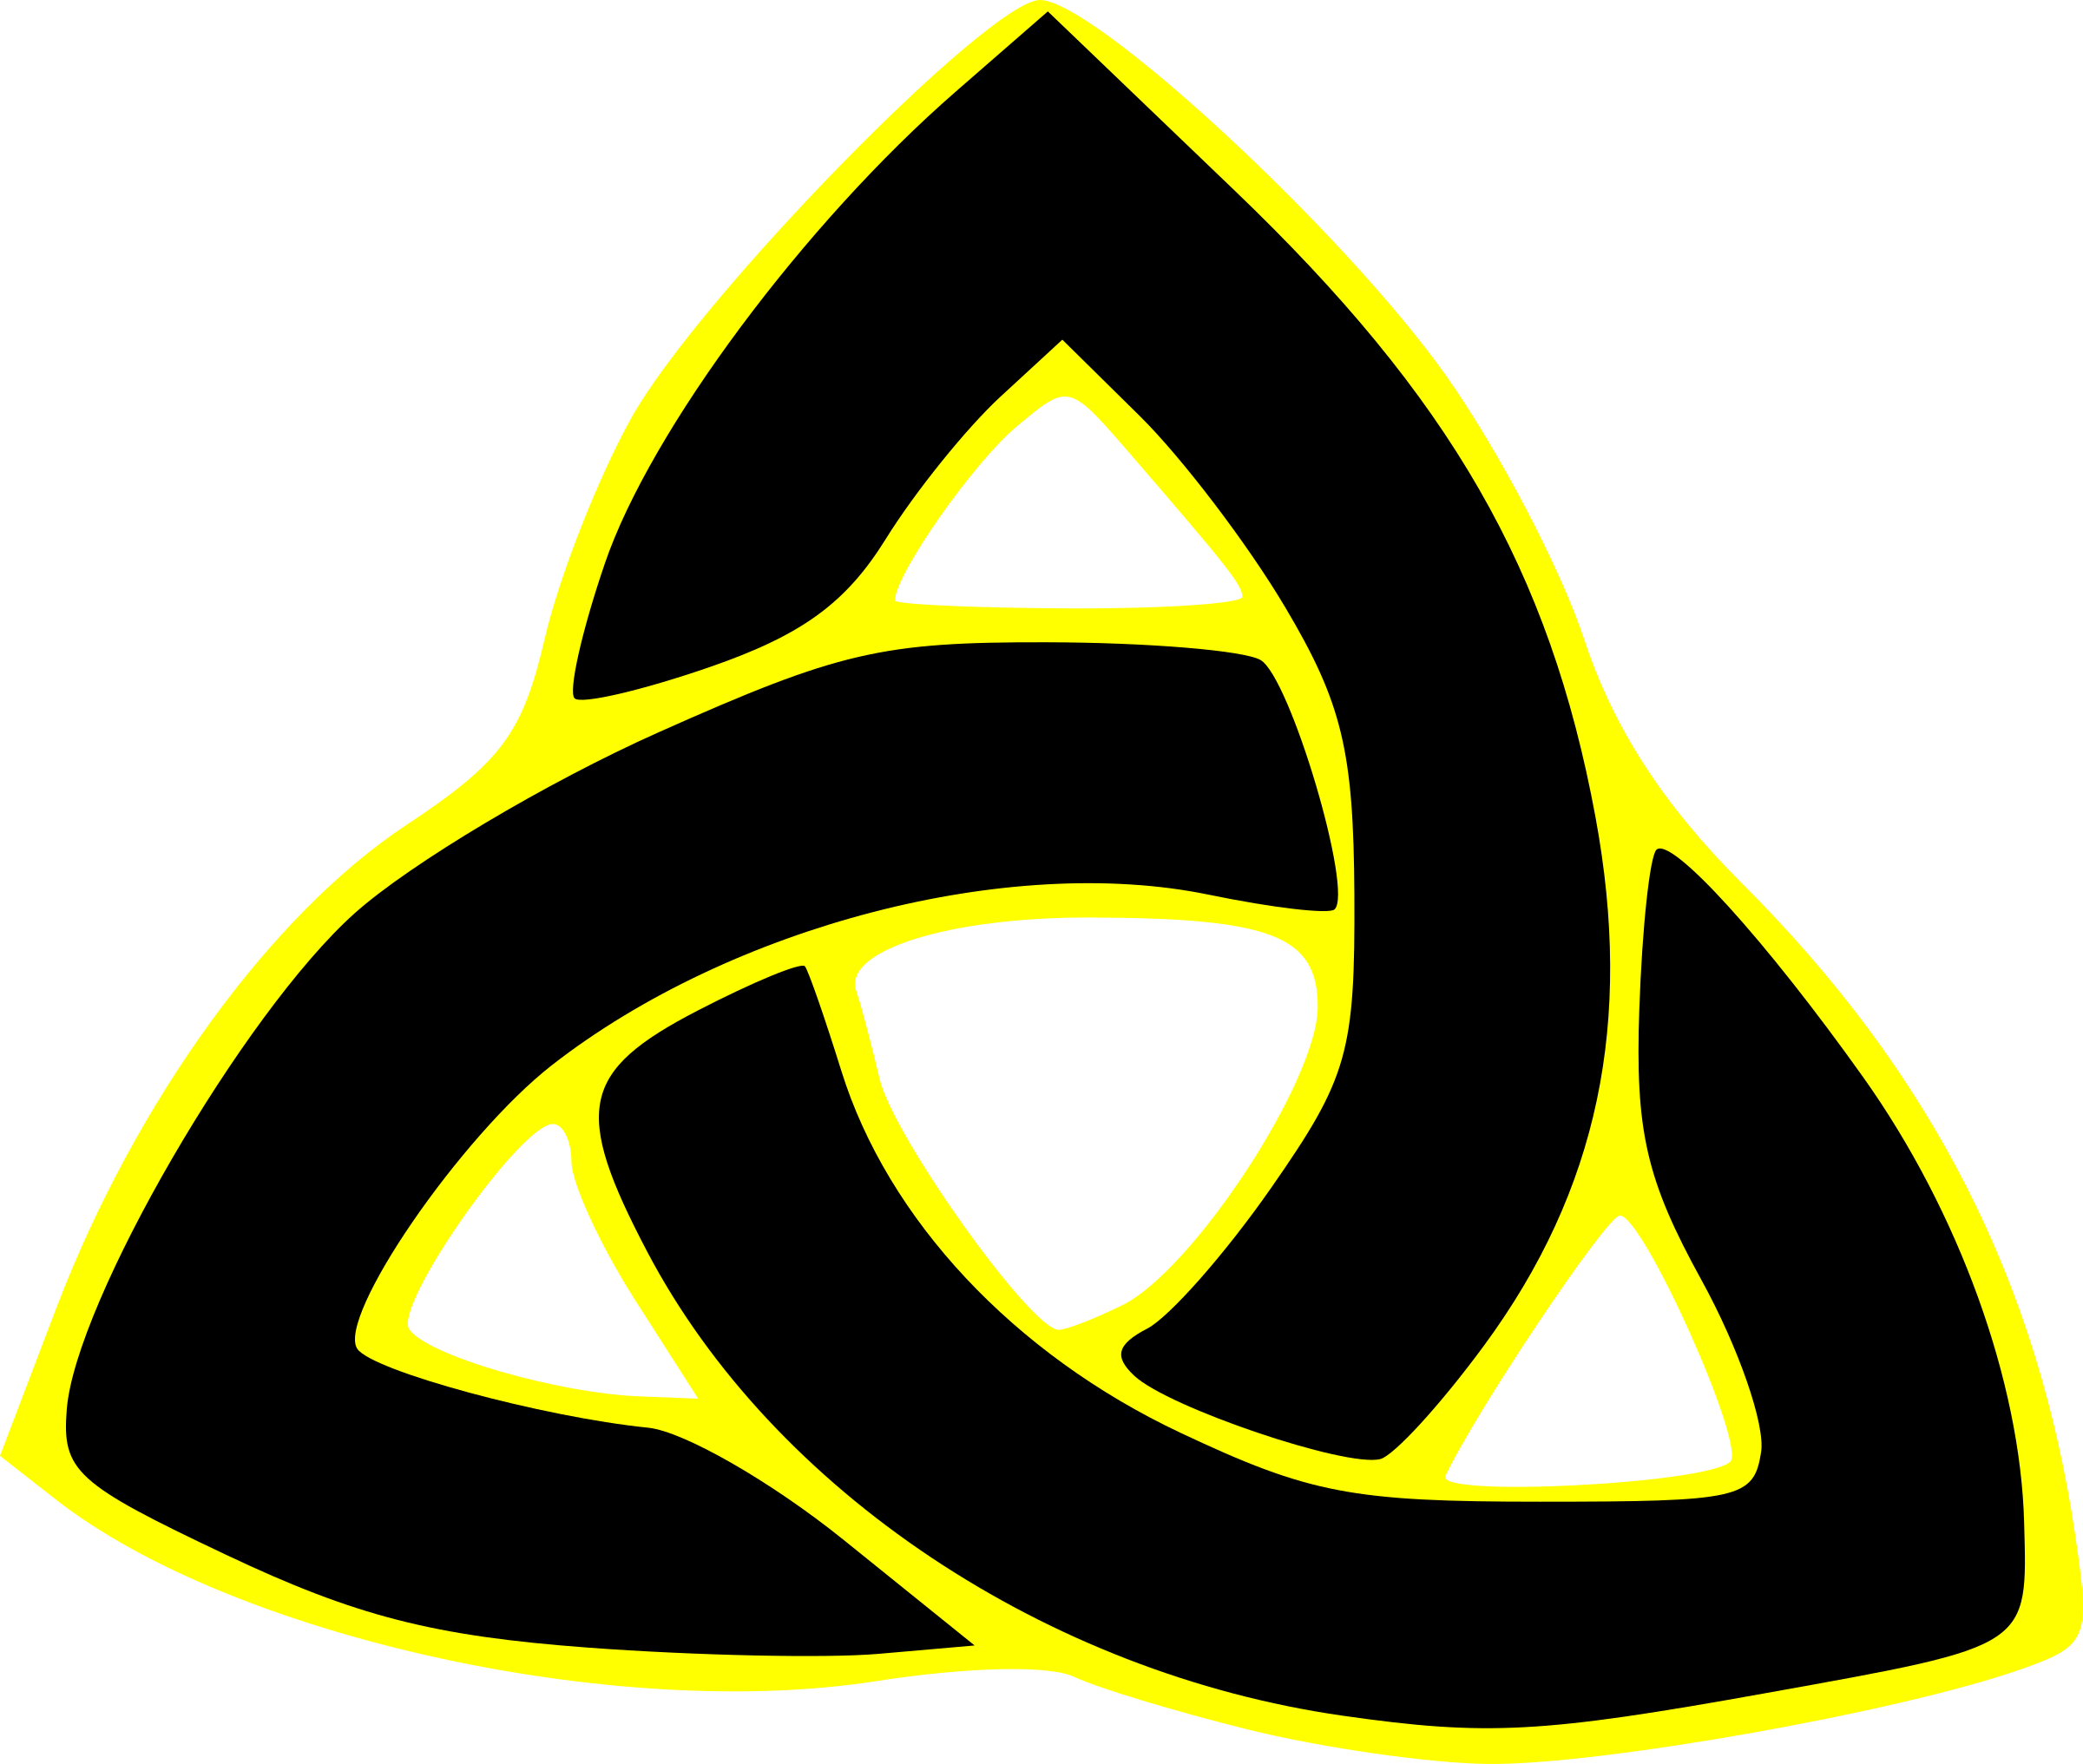 Clipart - simple trinity knot